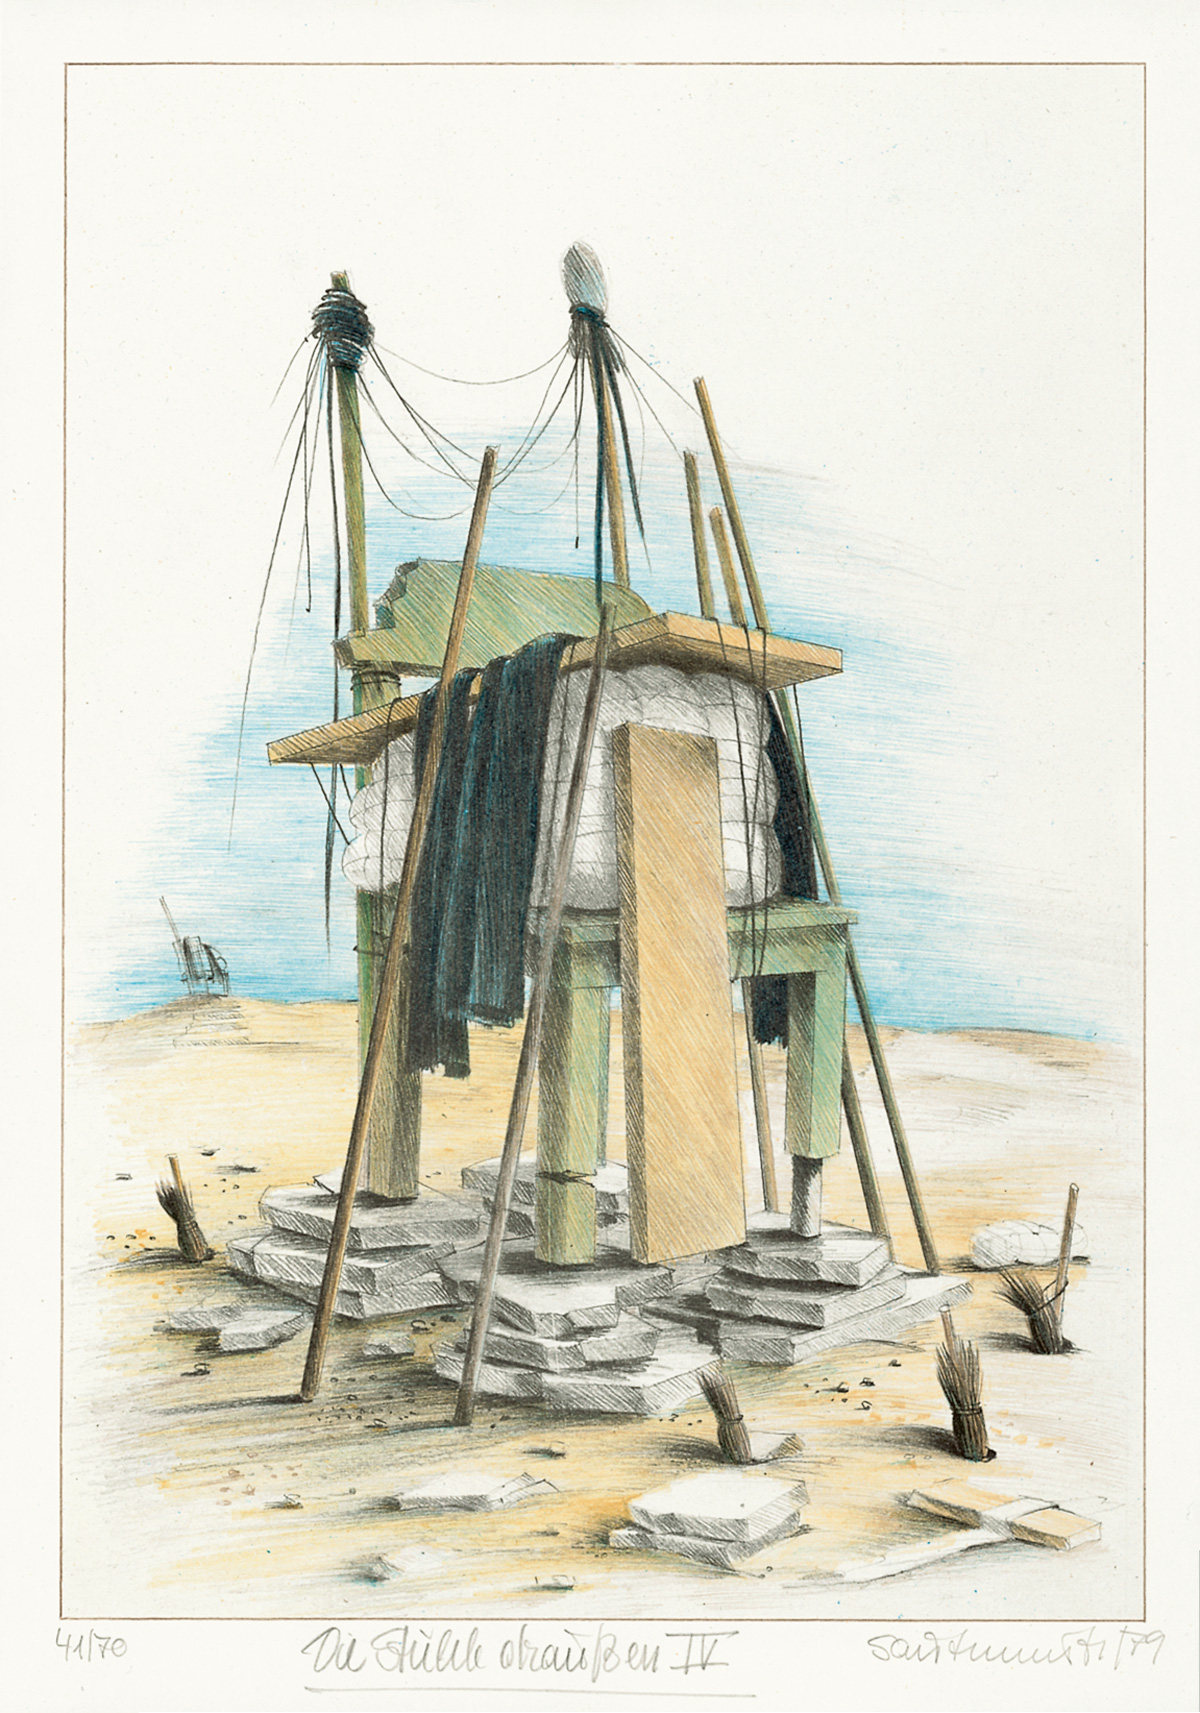 Die Stuehle draussen I, 1979, Lithographie, 31x25cm